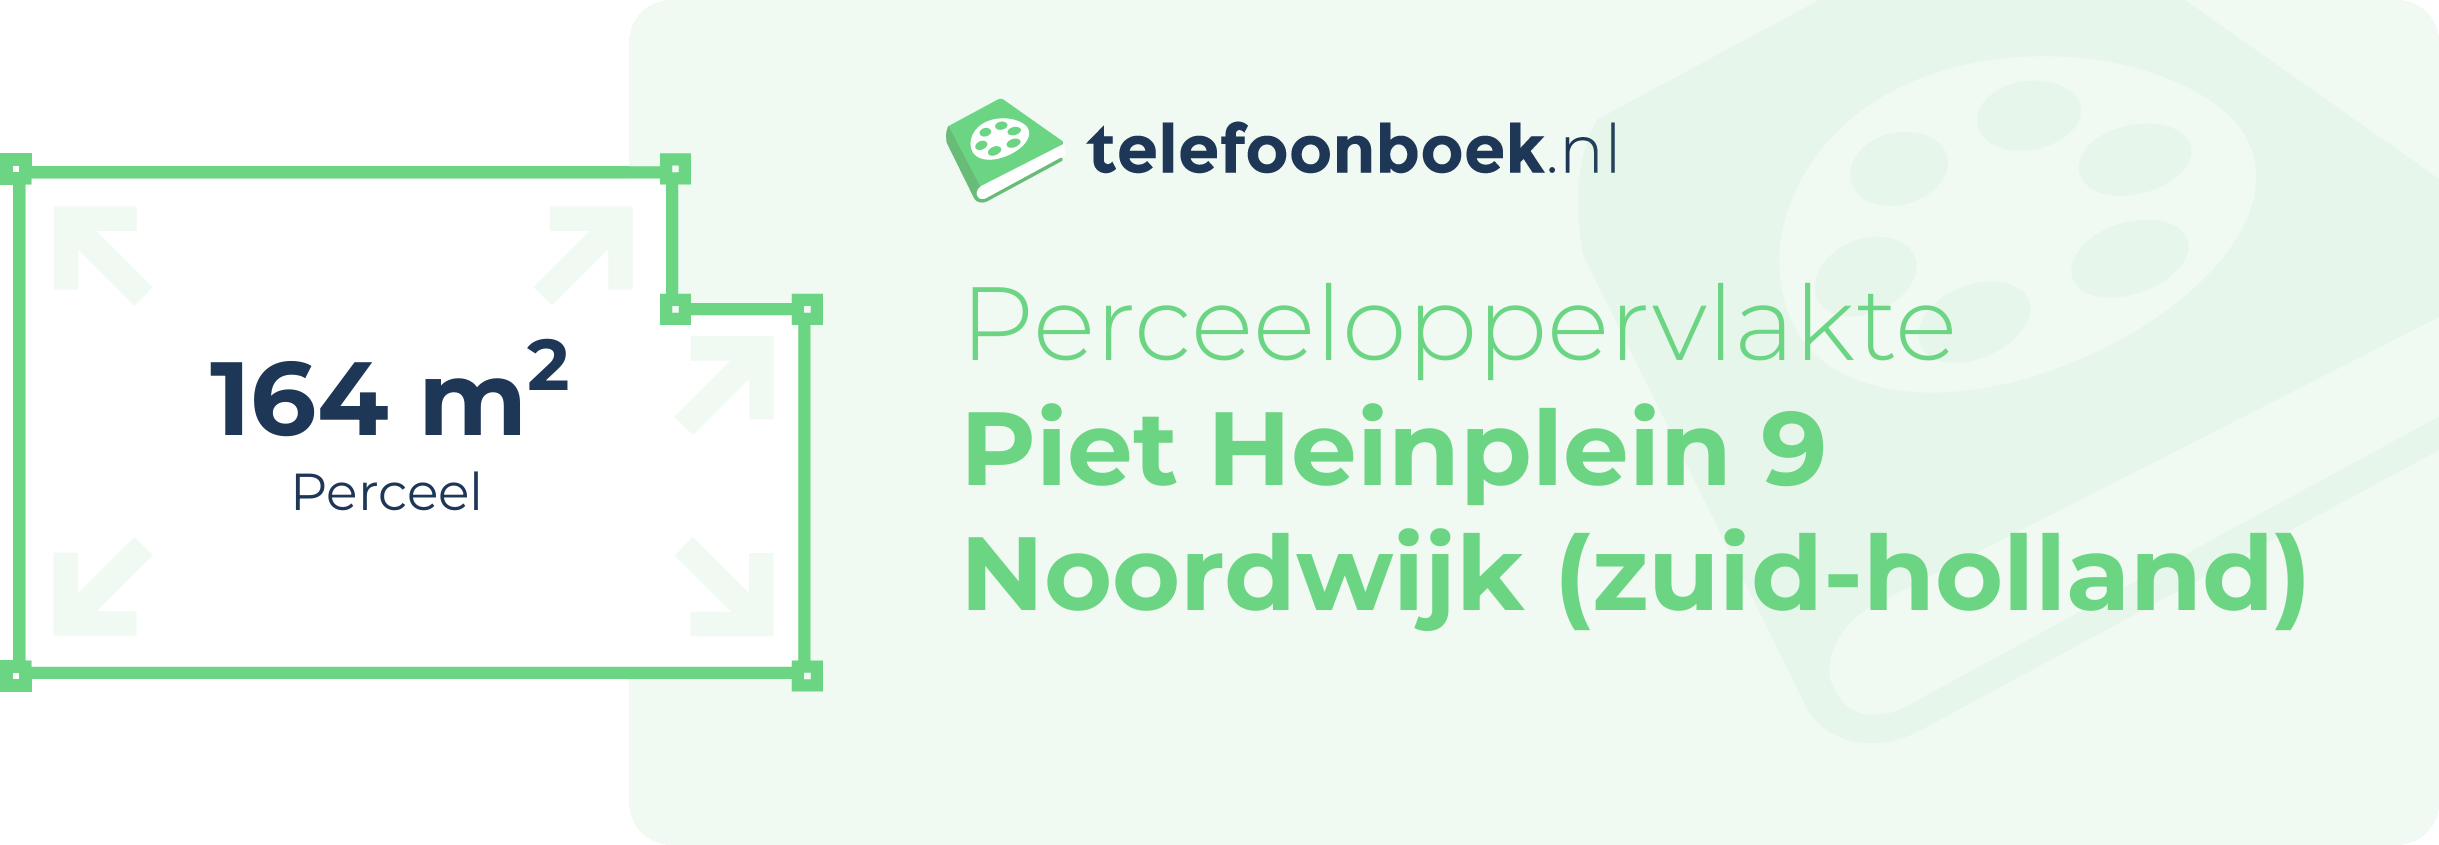 Perceeloppervlakte Piet Heinplein 9 Noordwijk (Zuid-Holland)